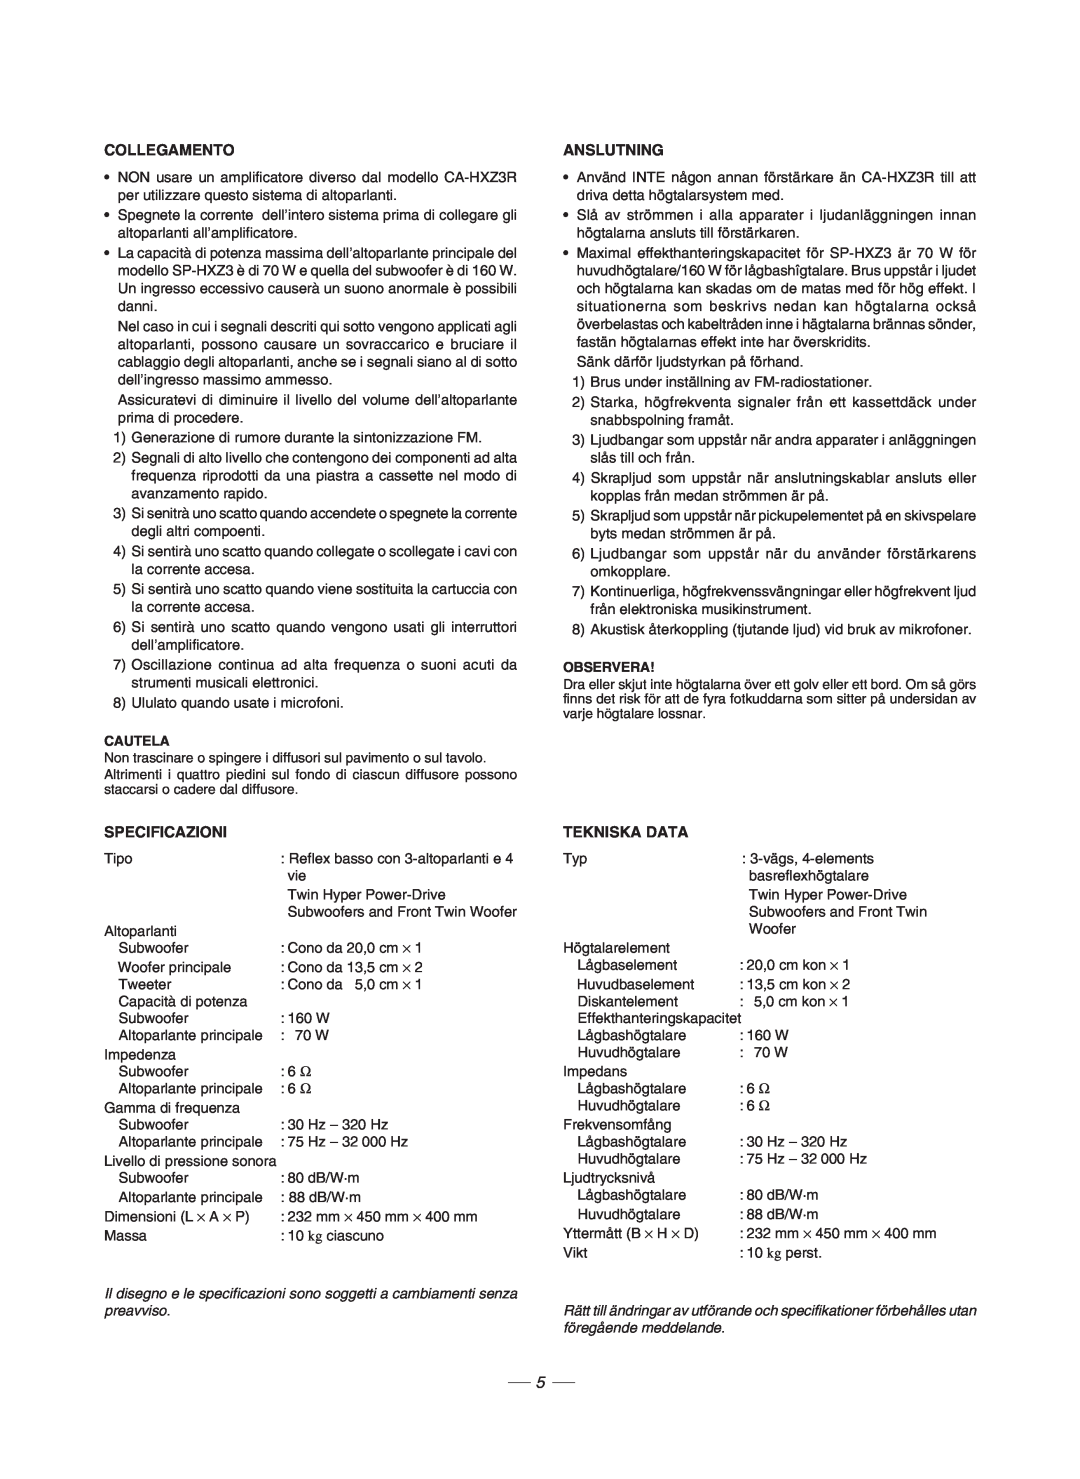 JVC GVT0086-008A, CA-HXZ3R manual Collegamento, Anslutning, Specificazioni, Tekniska Data 